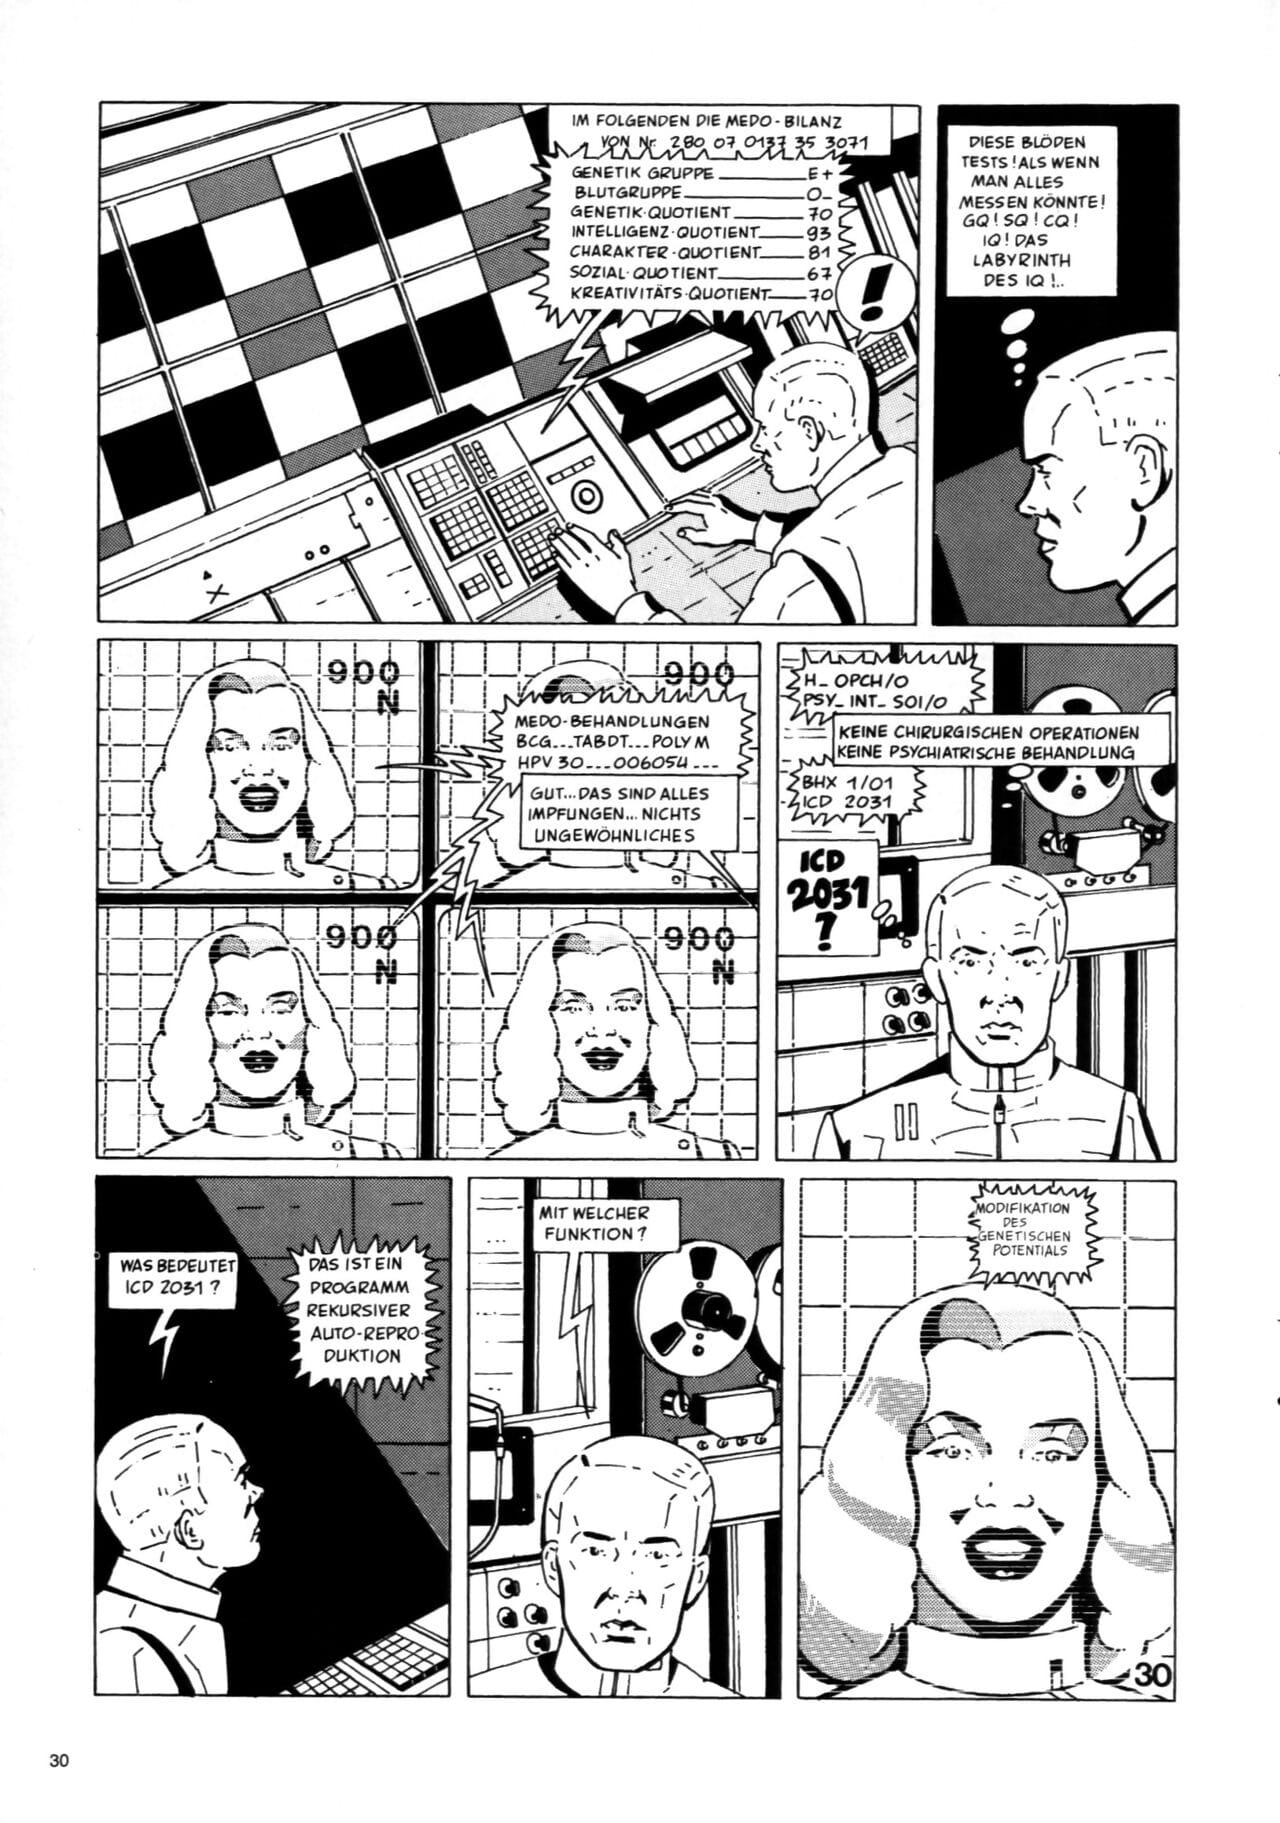 schwermetall #080 PART 2 page 1